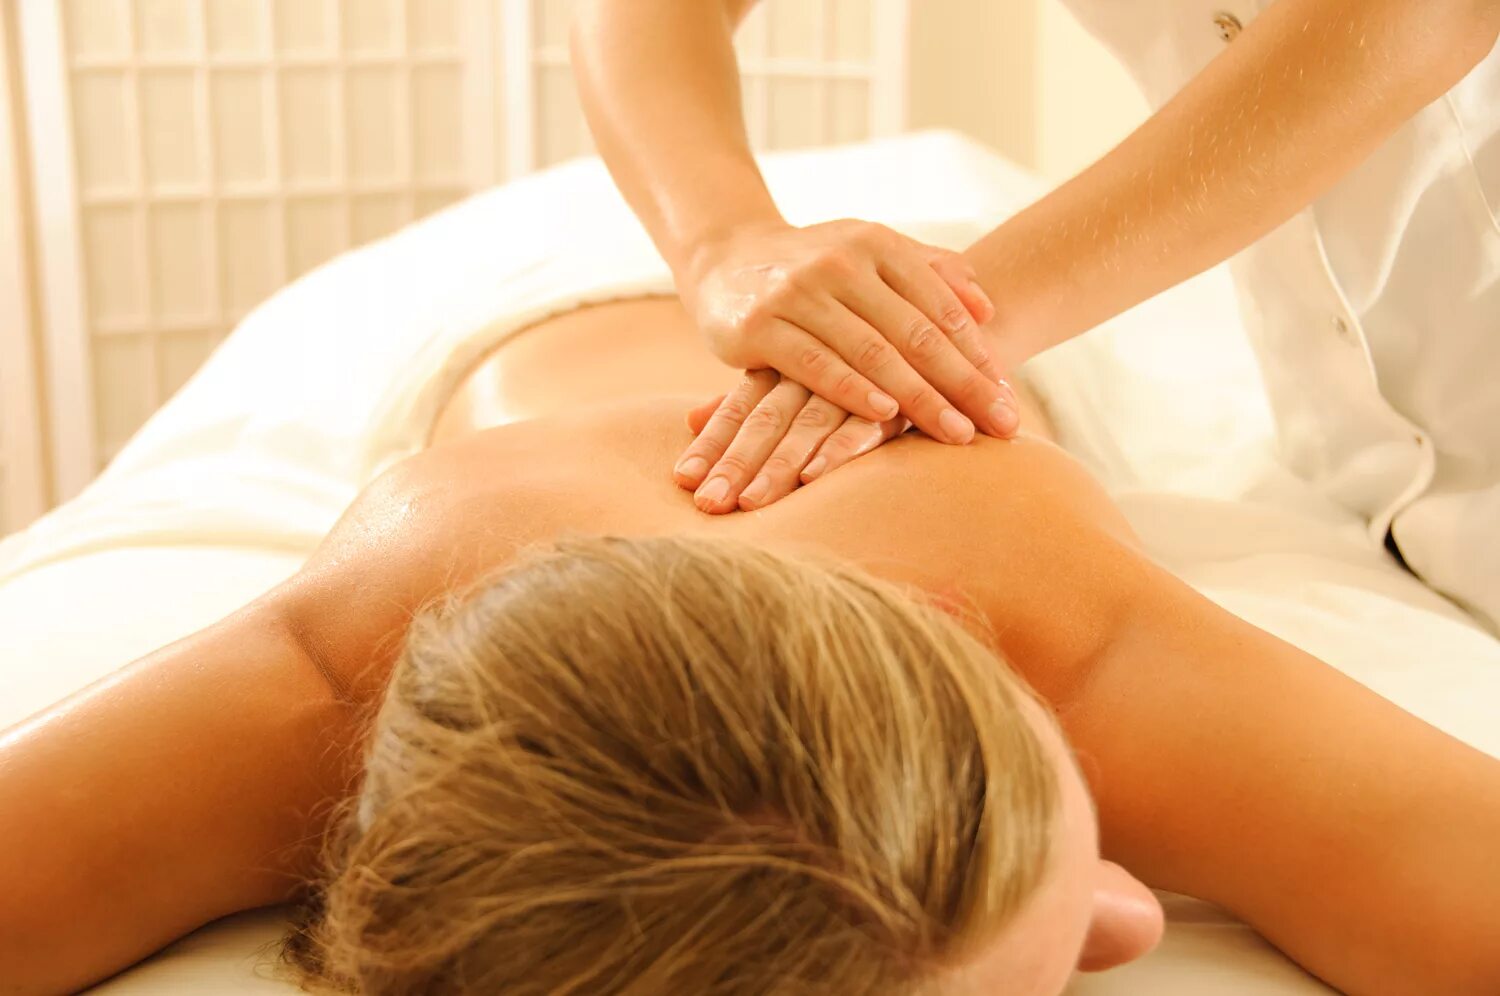 Hot body massage. Классический массаж. Массаж спины. Классический лечебный массаж. Классический массаж спины.